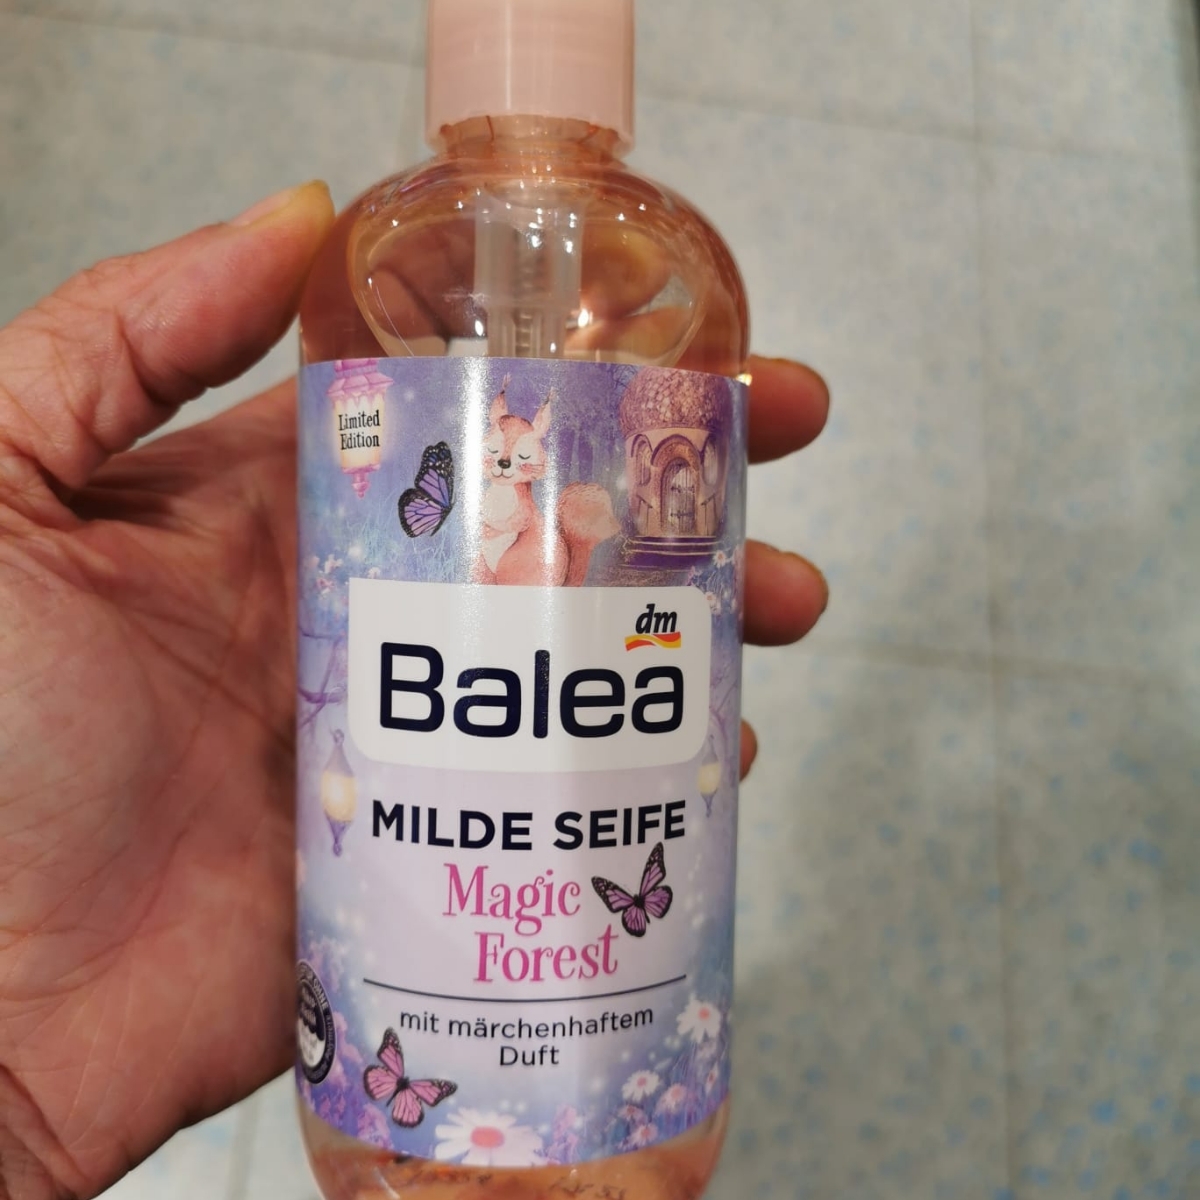 Dm balea milde seife Reviews | abillion